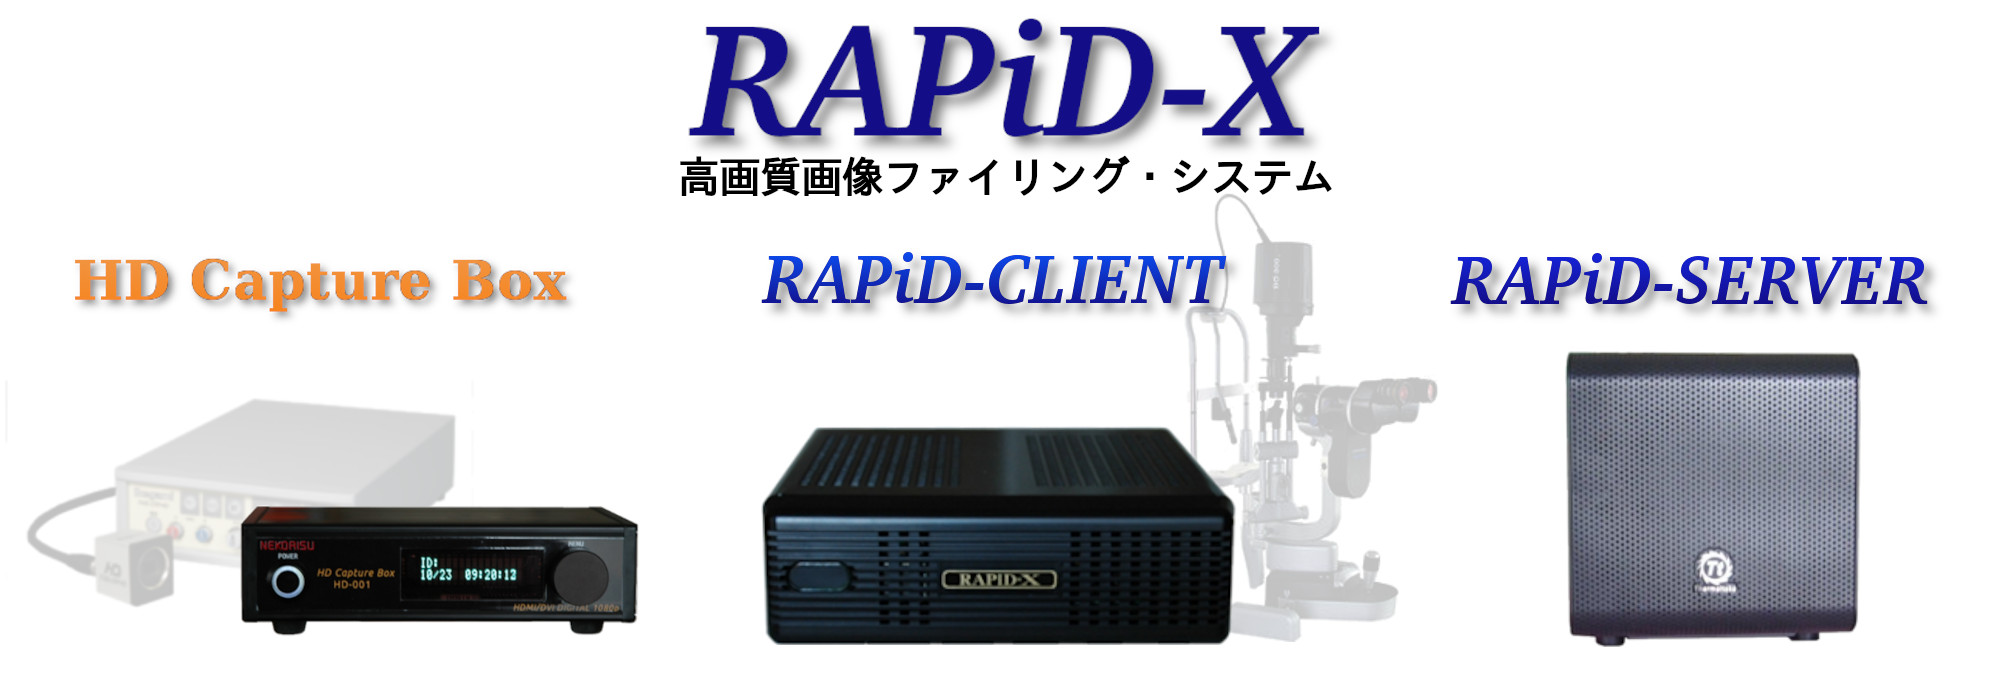 RAPiD-X